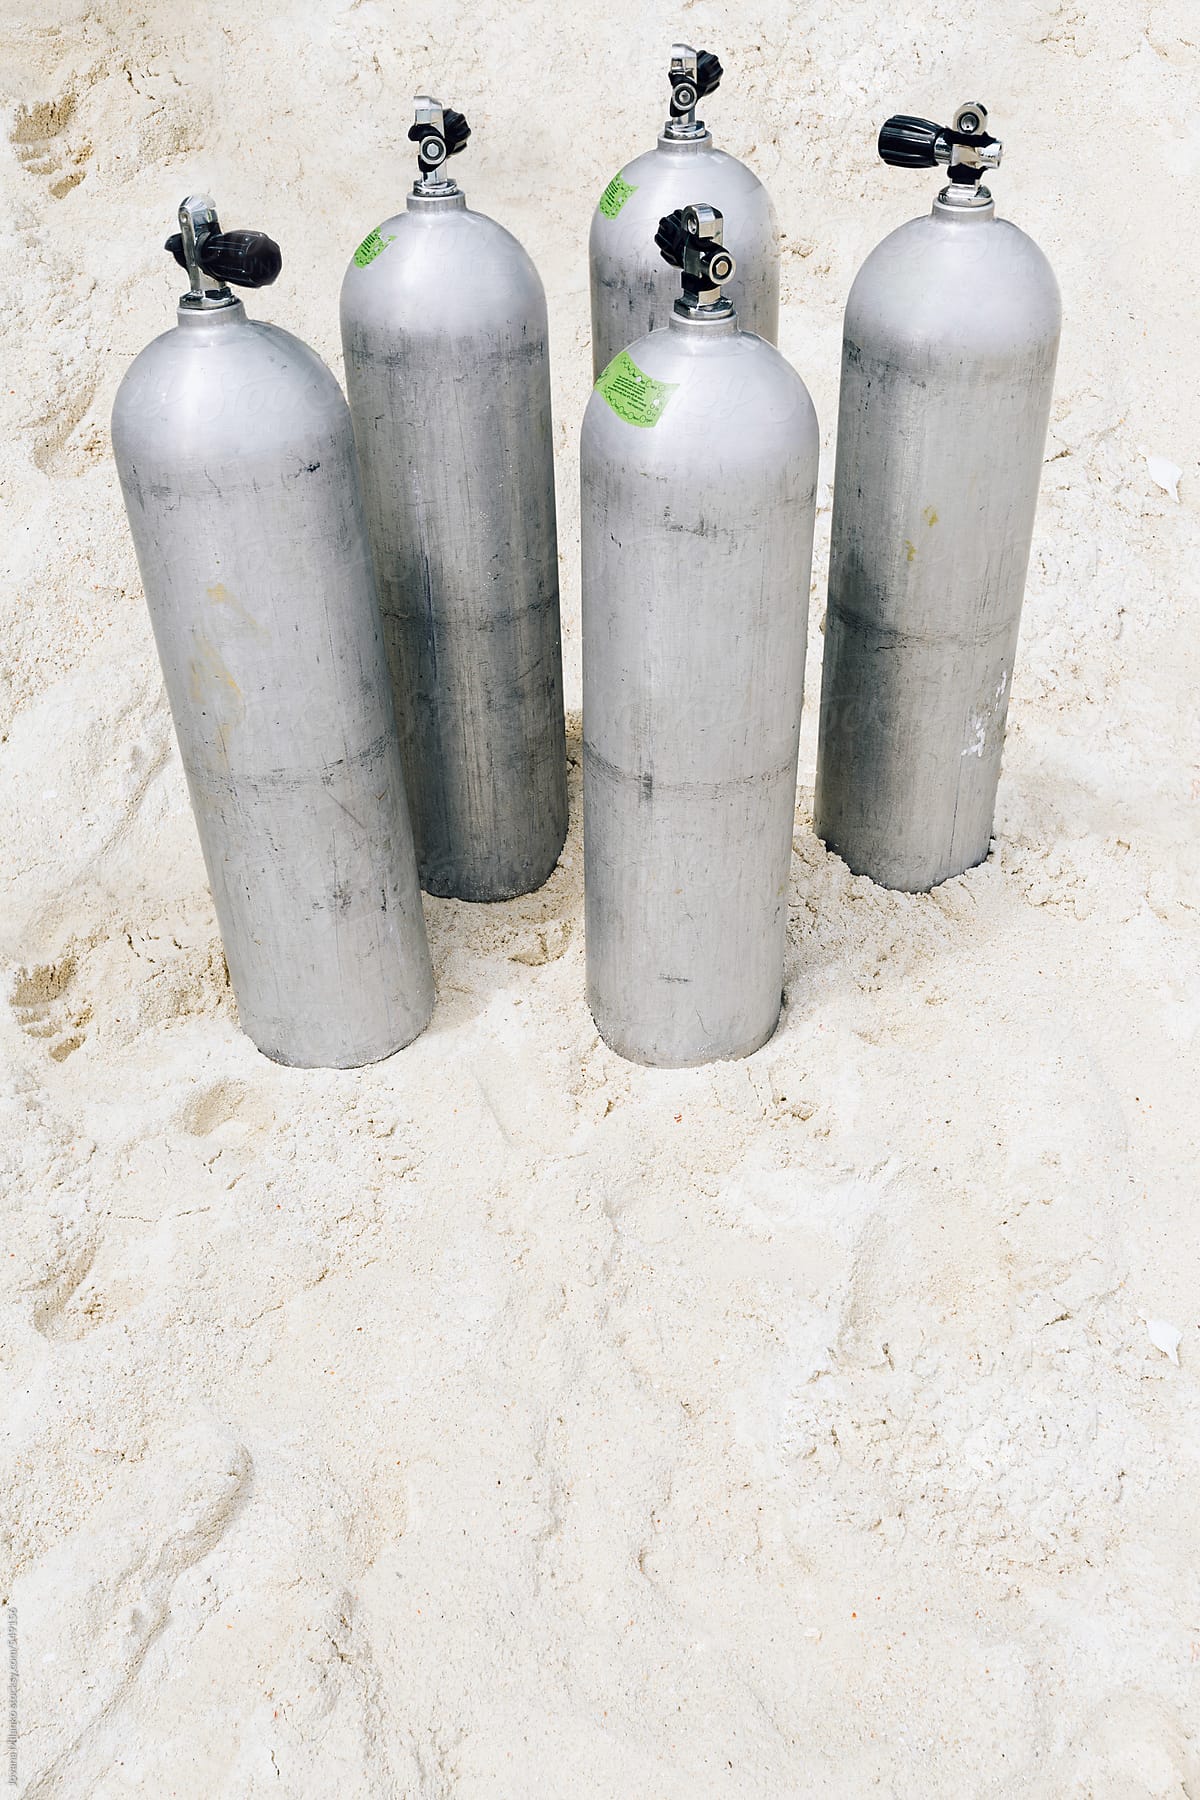 Five aluminum, air scuba diving tanks on the sandy beach